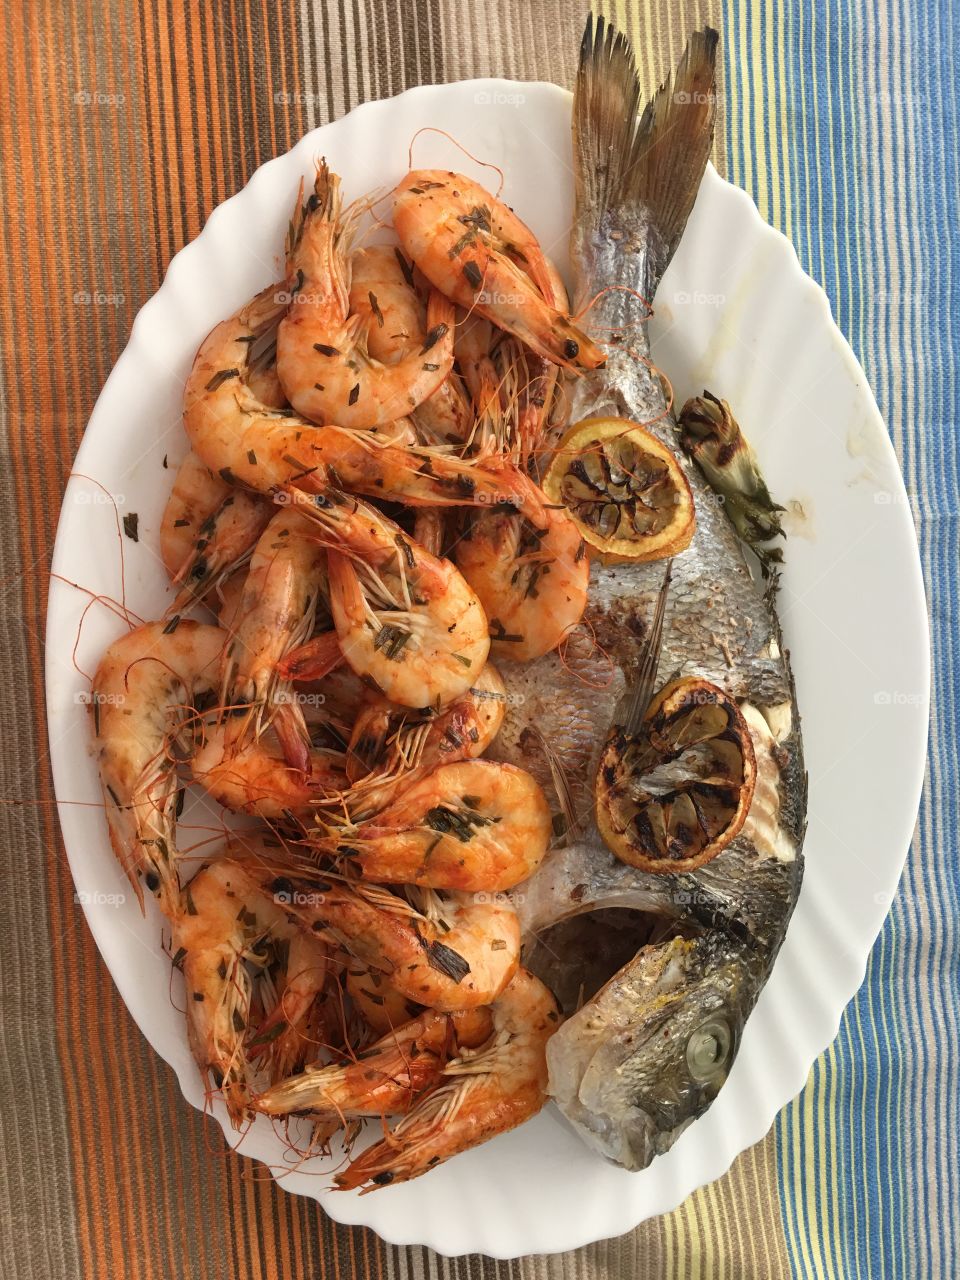 Home made shrimps with tarragon and tsipura fish with lemon